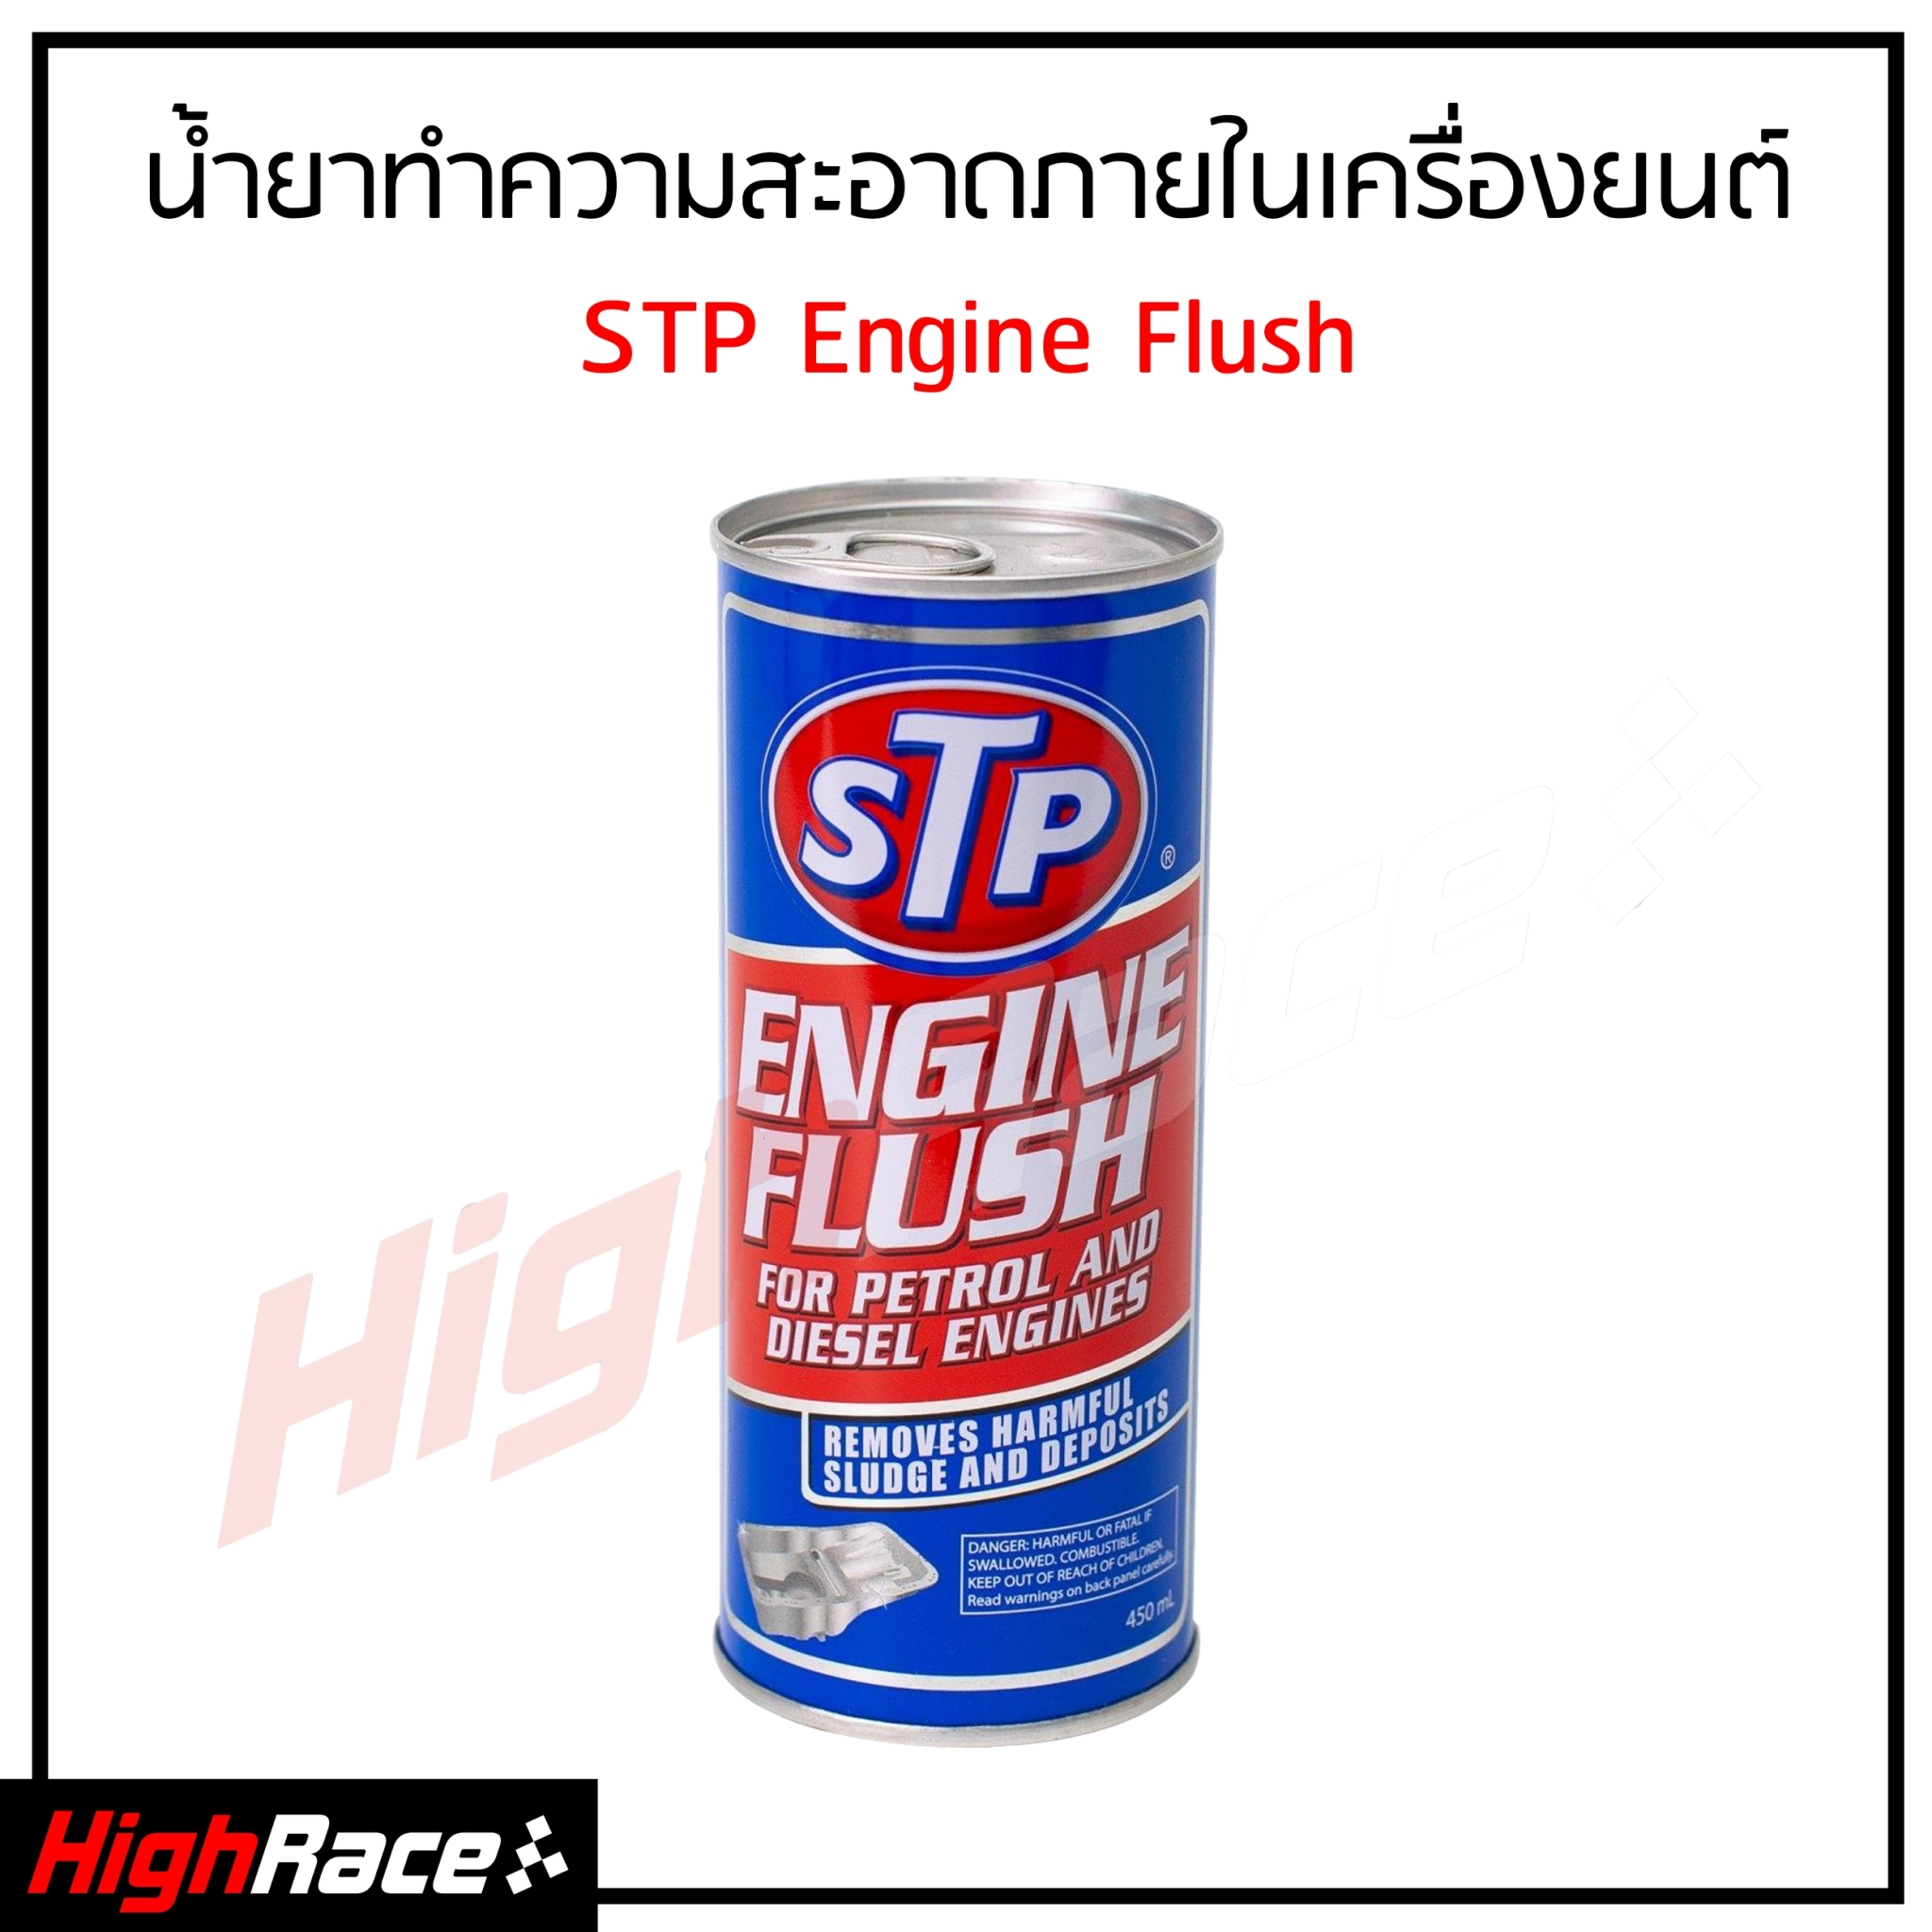 STP น้ำยาทำความสะอาดเครื่องยนต์ (เบนซินและดีเซล) 19004 STP Engine Flush ขนาด 450 ml.